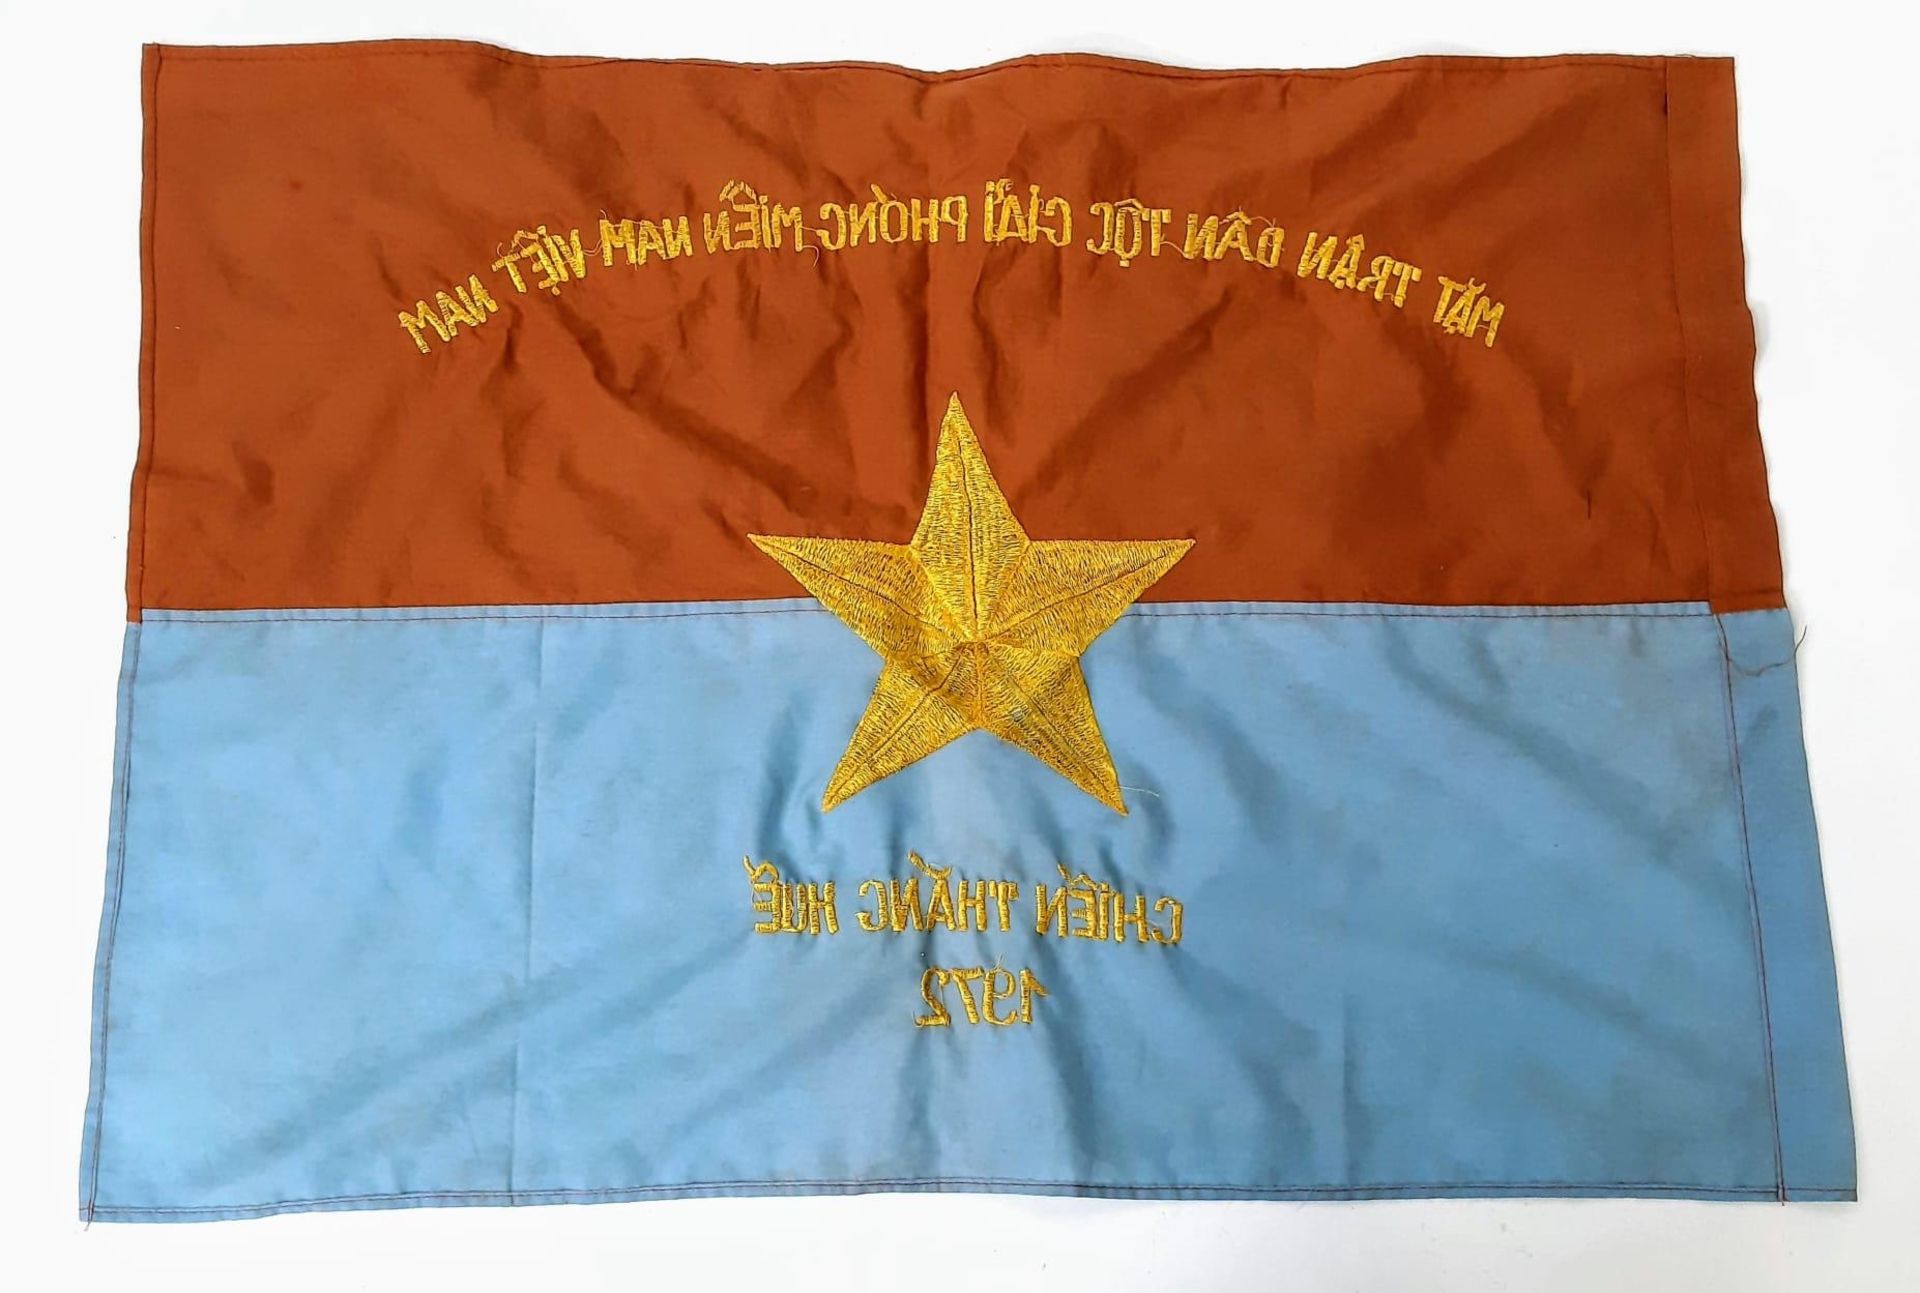 Vietnam War Era Vietcong Victory Flag. “National Liberation Army of Vietnam” “Victory” Thang Hue - Image 2 of 2